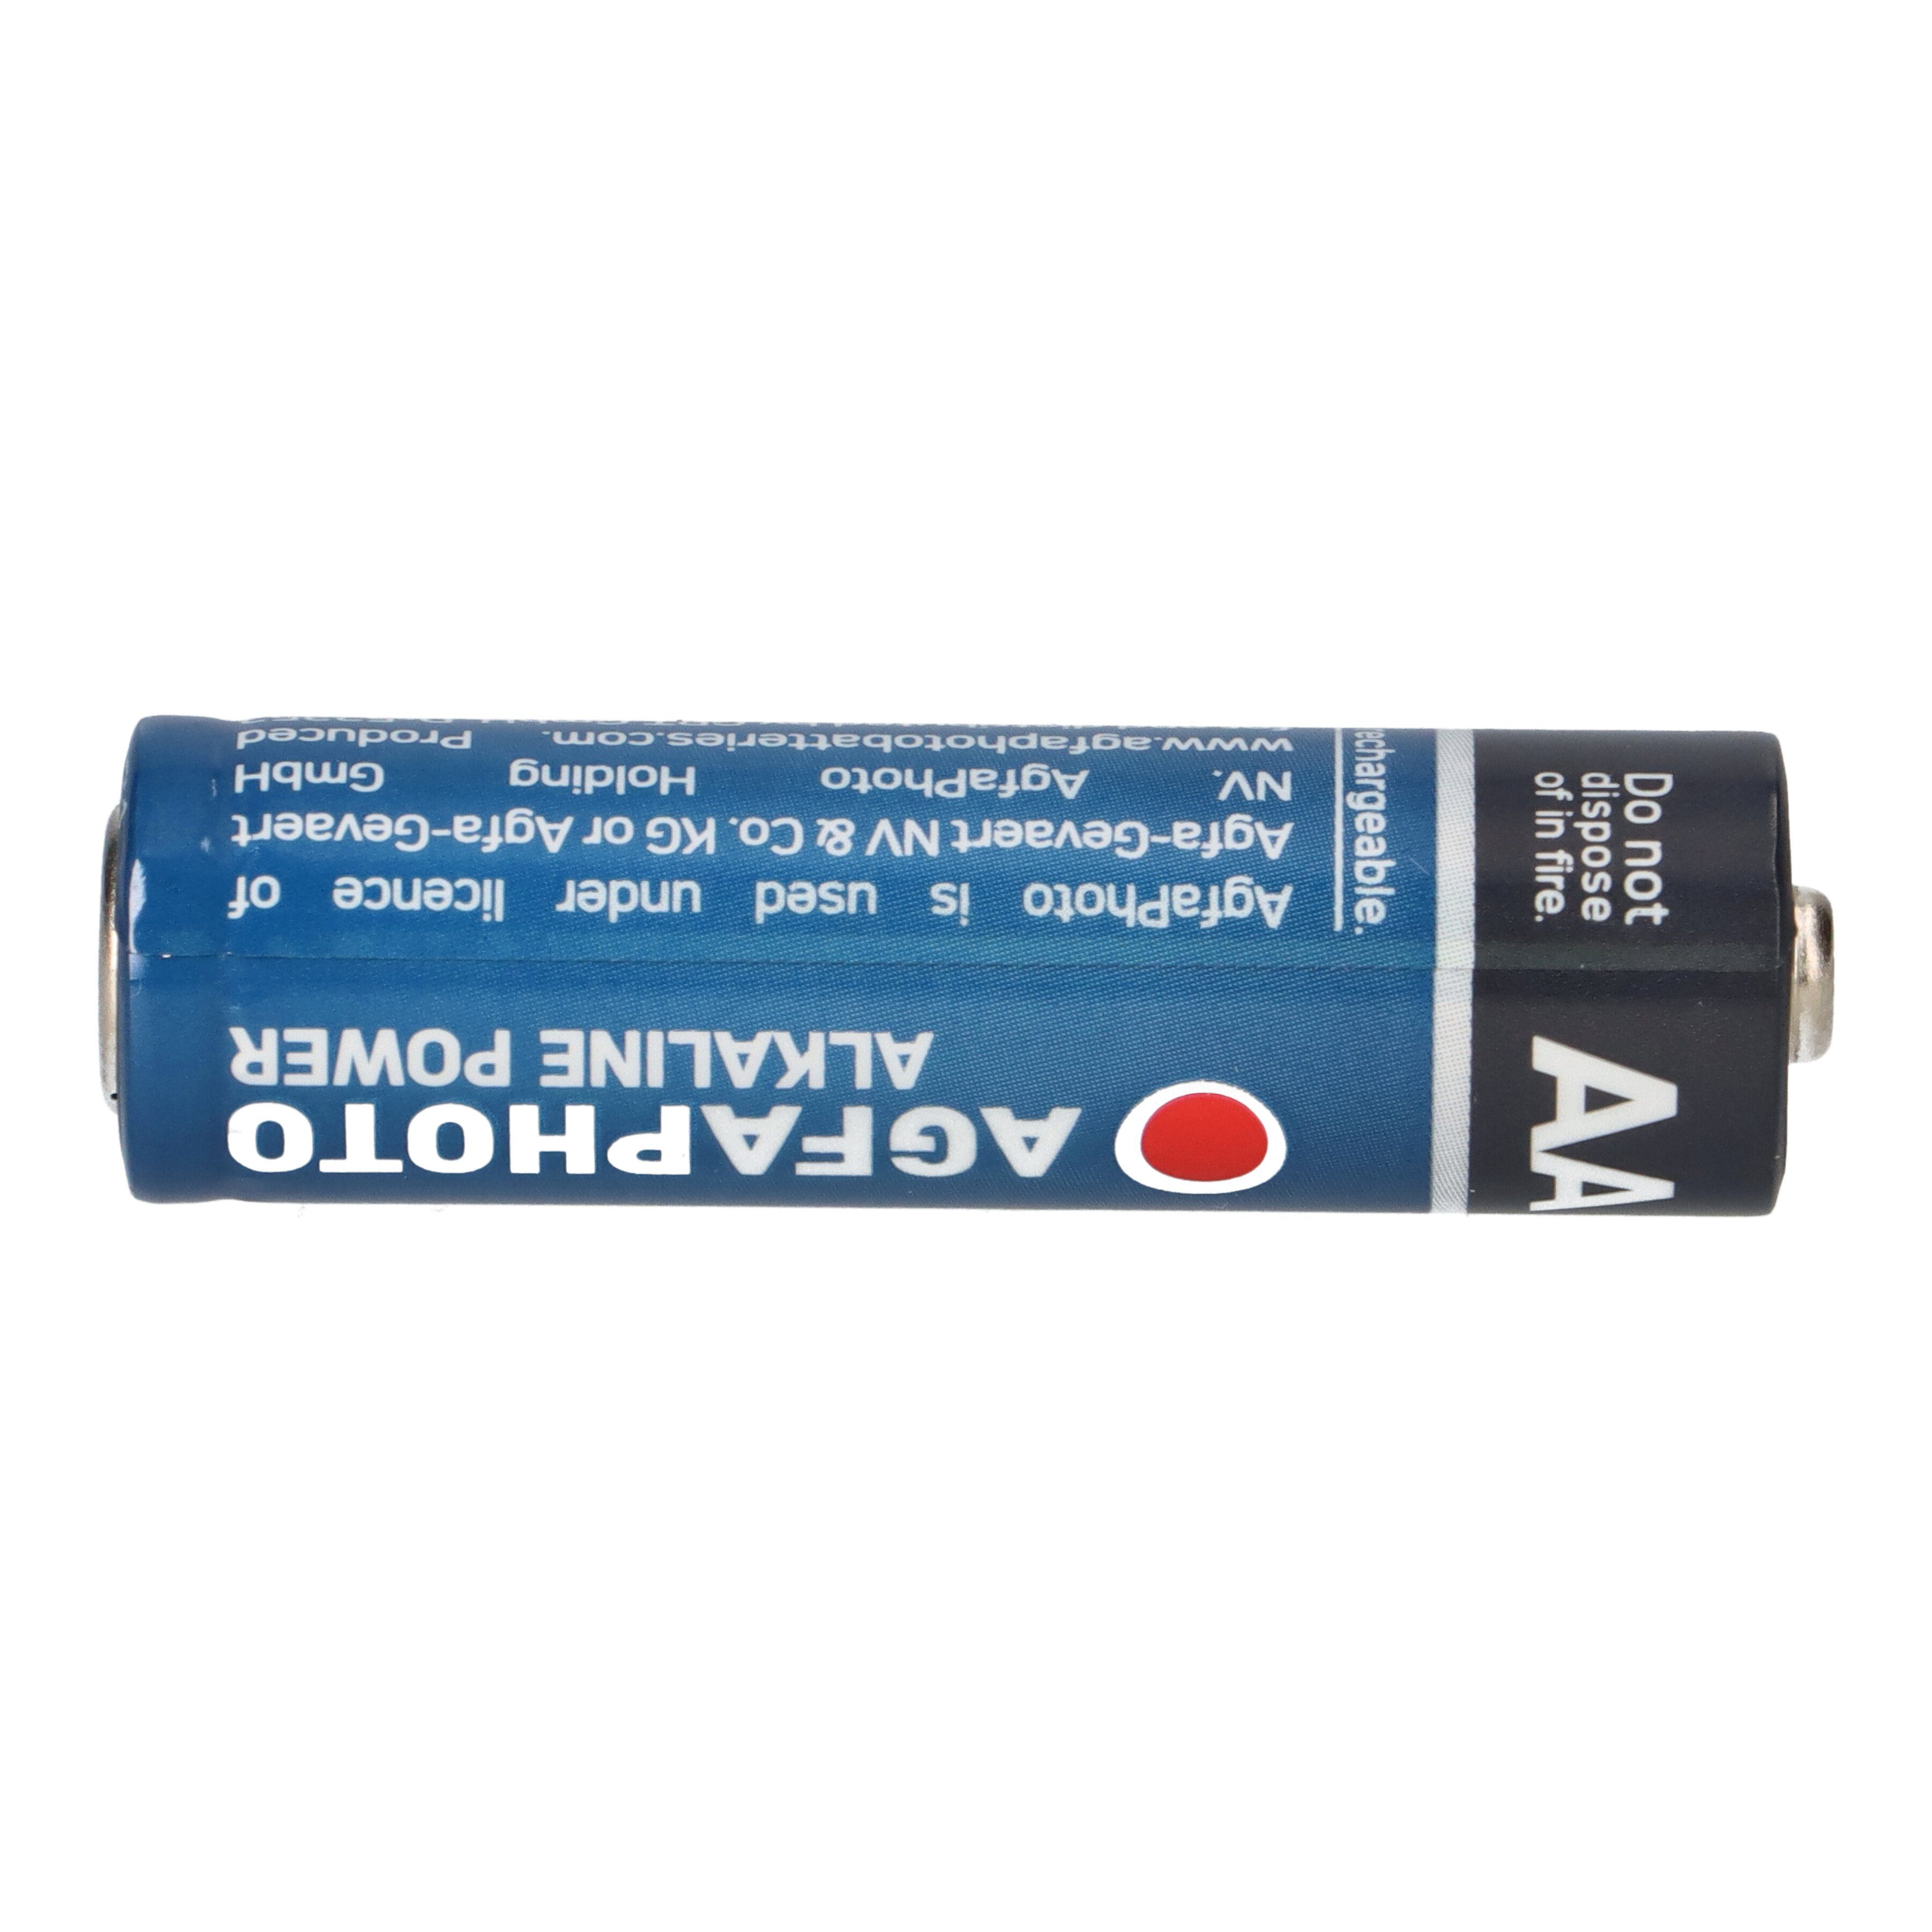 Alkaline AGFAPHOTO 100 AgfaPhoto Batterie AA Stück Batterie Mignon 1.5V LR06